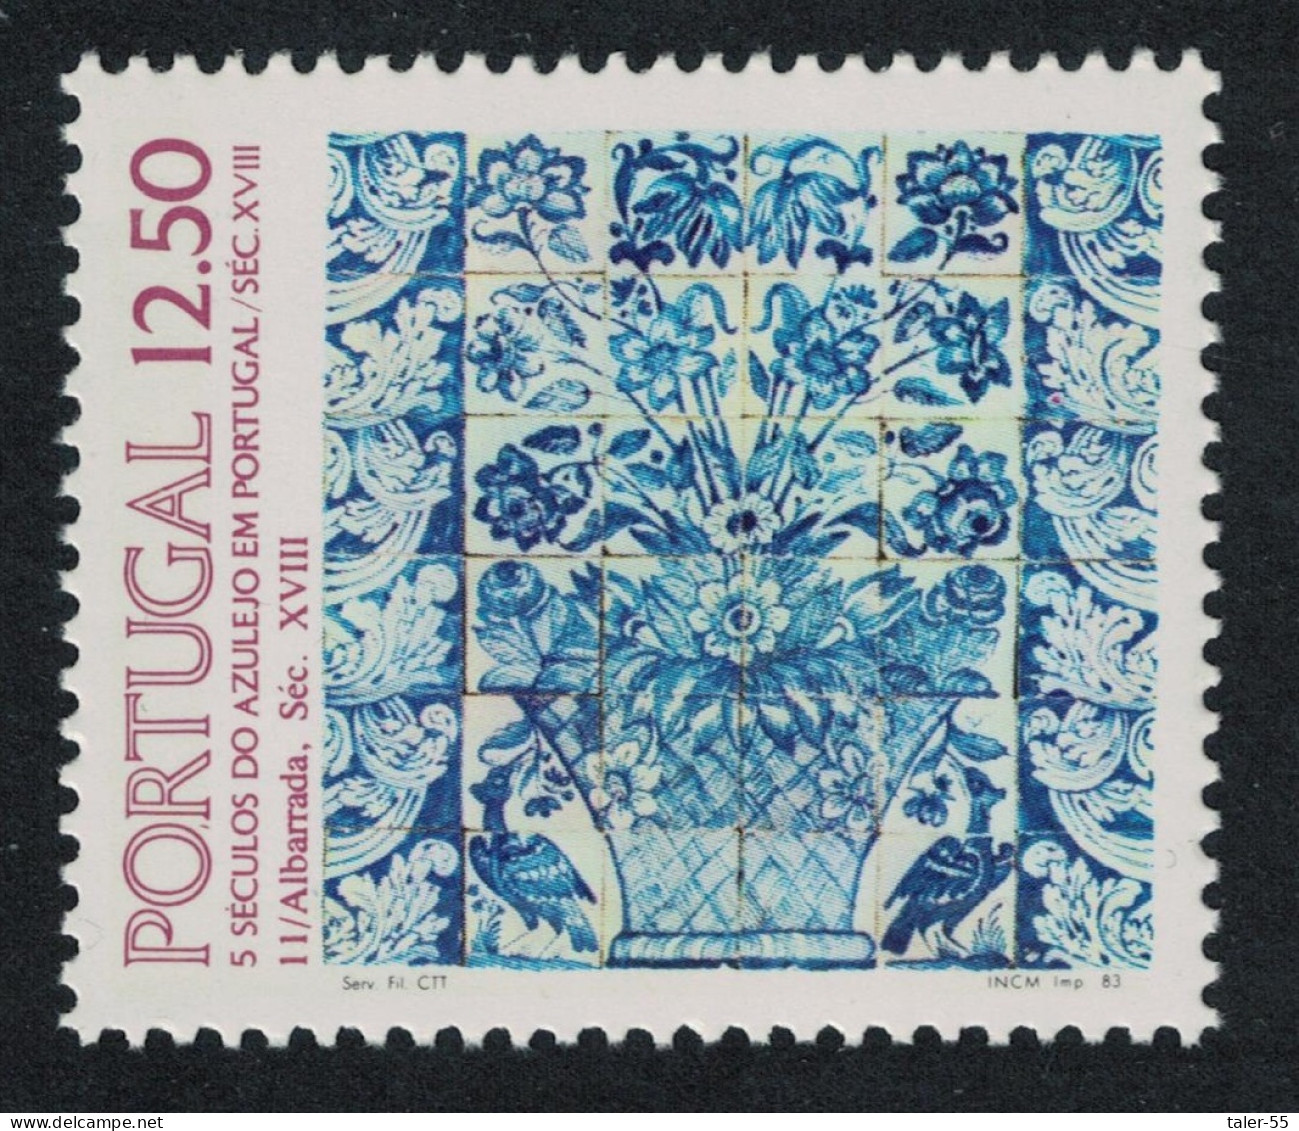 Portugal Tiles 11th Series 1983 MNH SG#1935 - Nuevos